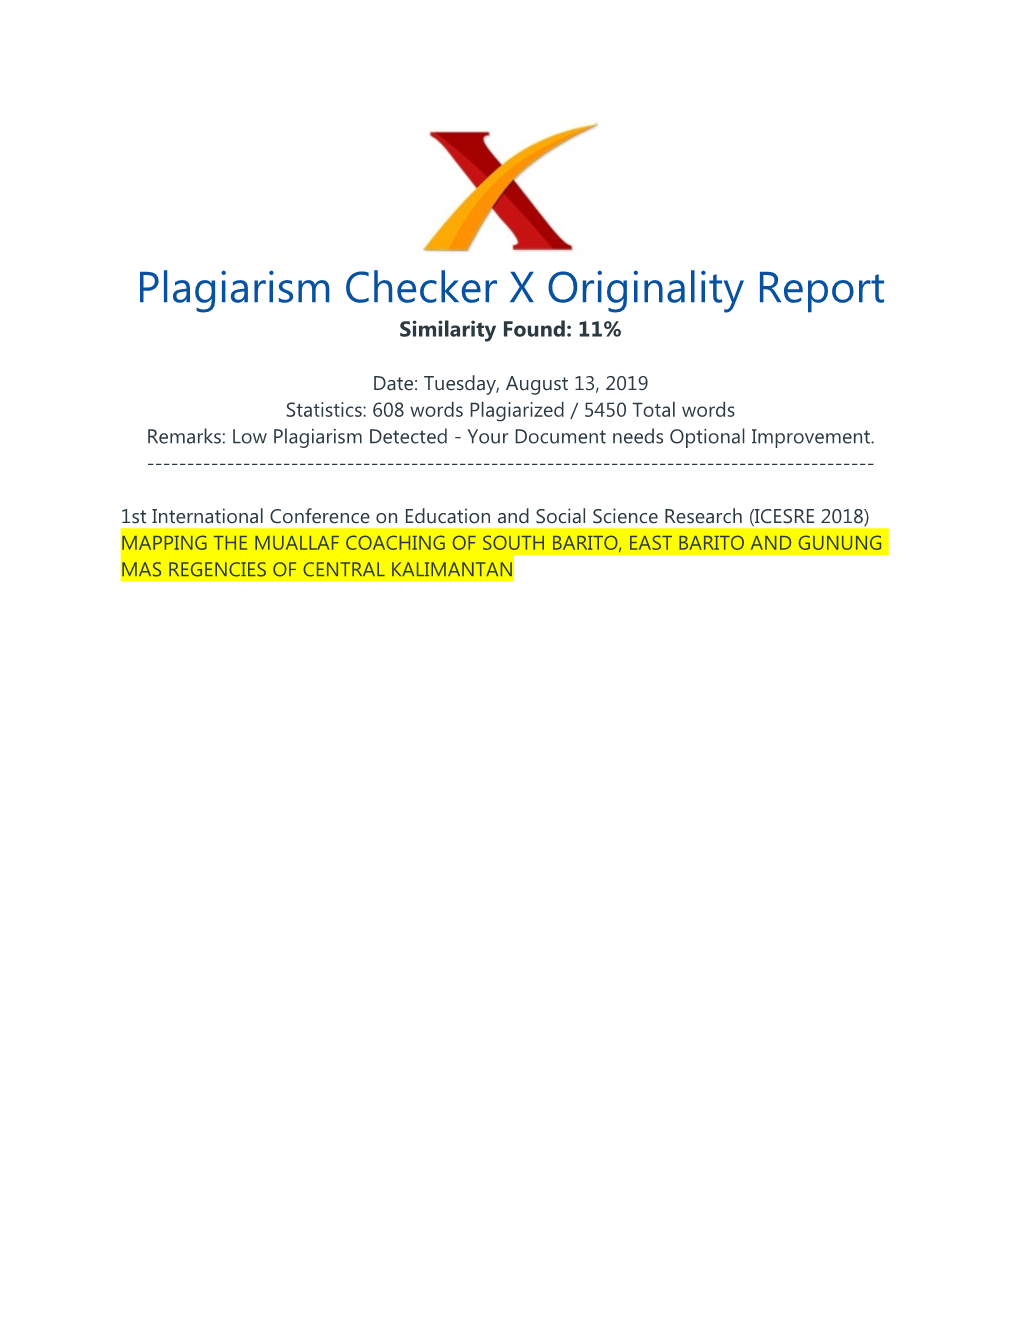 Plagiarism Checker X Originality Report Similarity Found: 11%